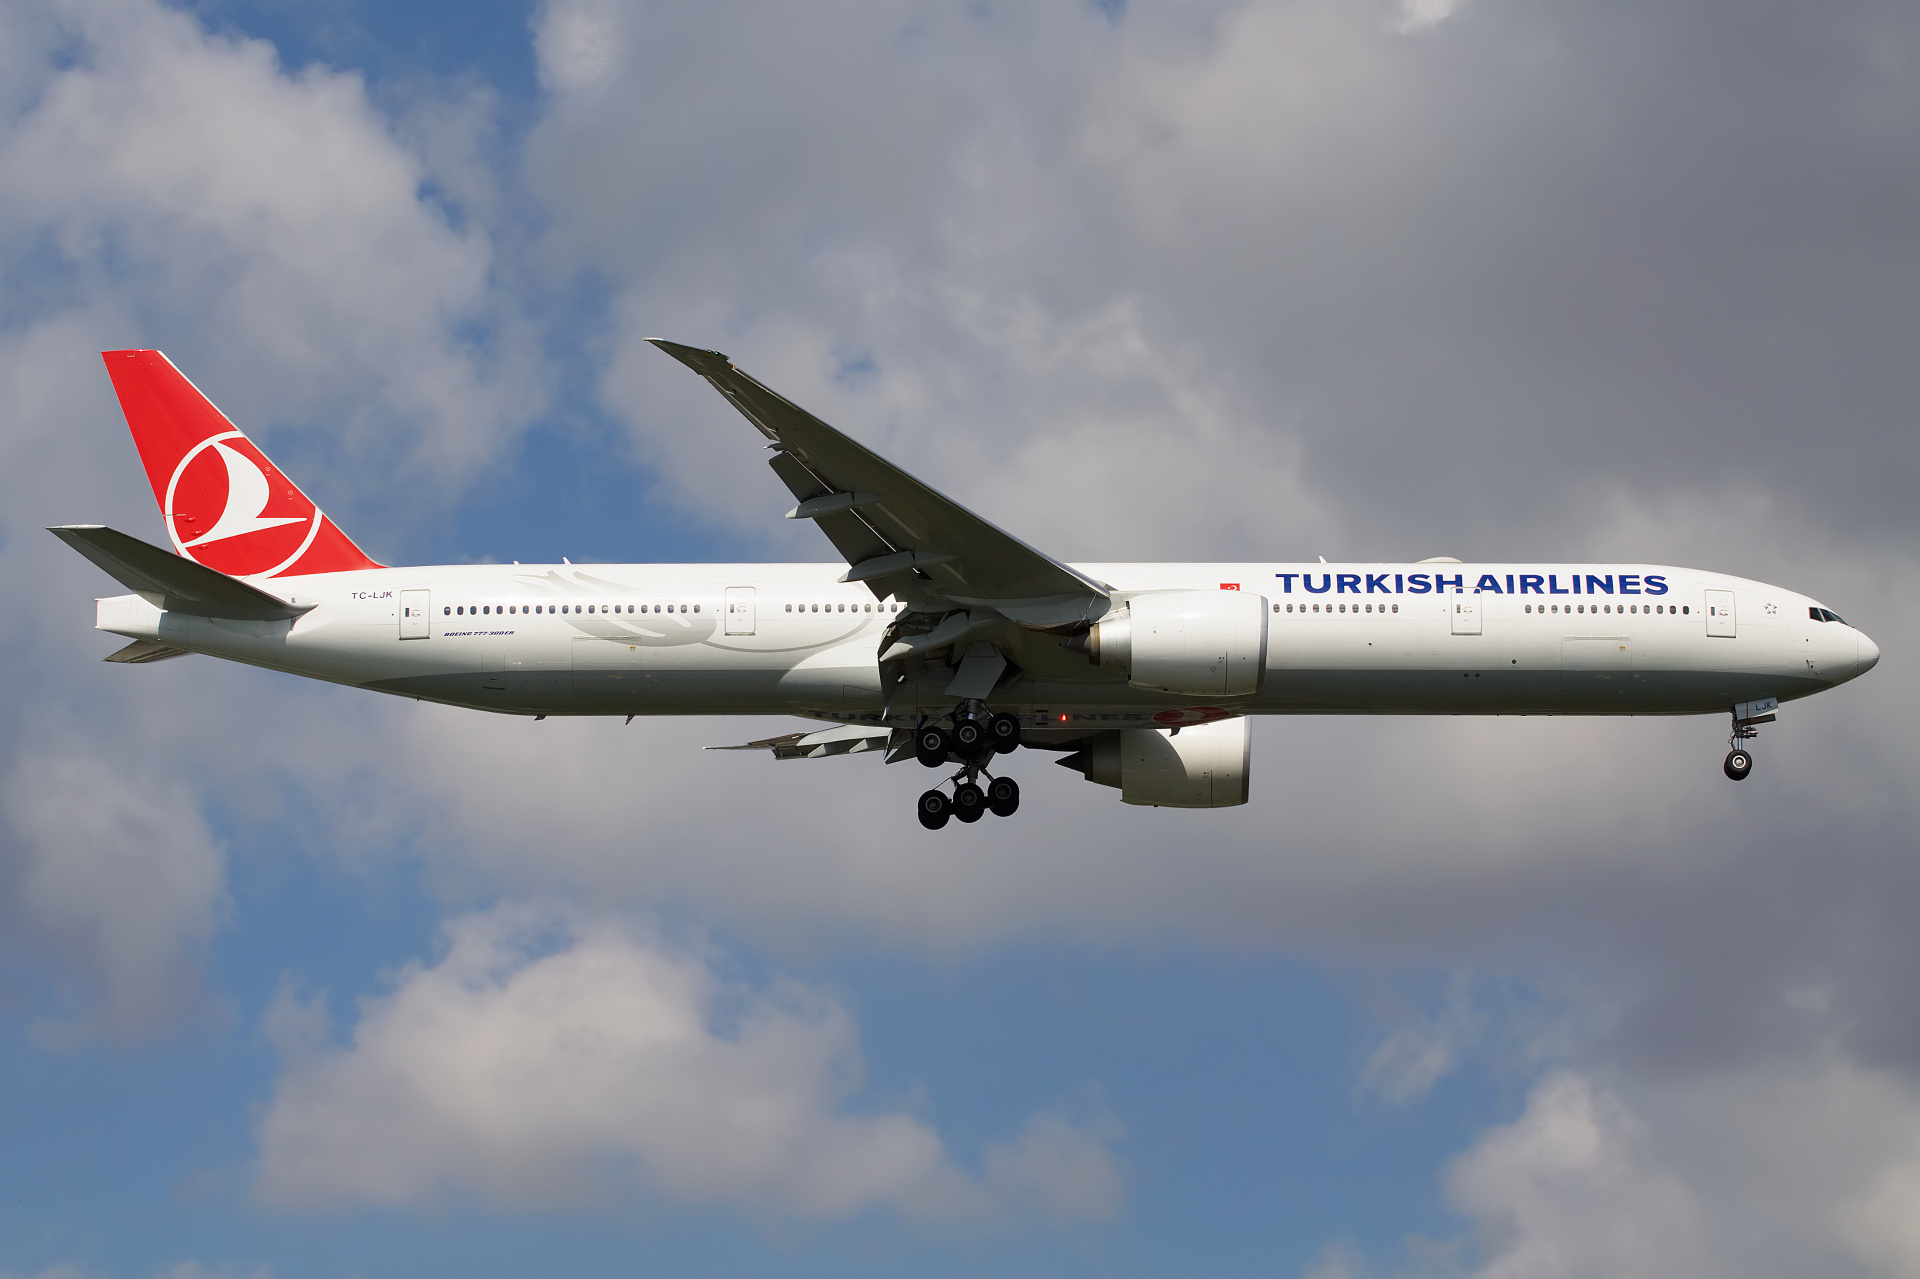 TC-LJK (Samoloty » Port Lotniczy im. Atatürka w Stambule » Boeing 777-300ER » THY Turkish Airlines)